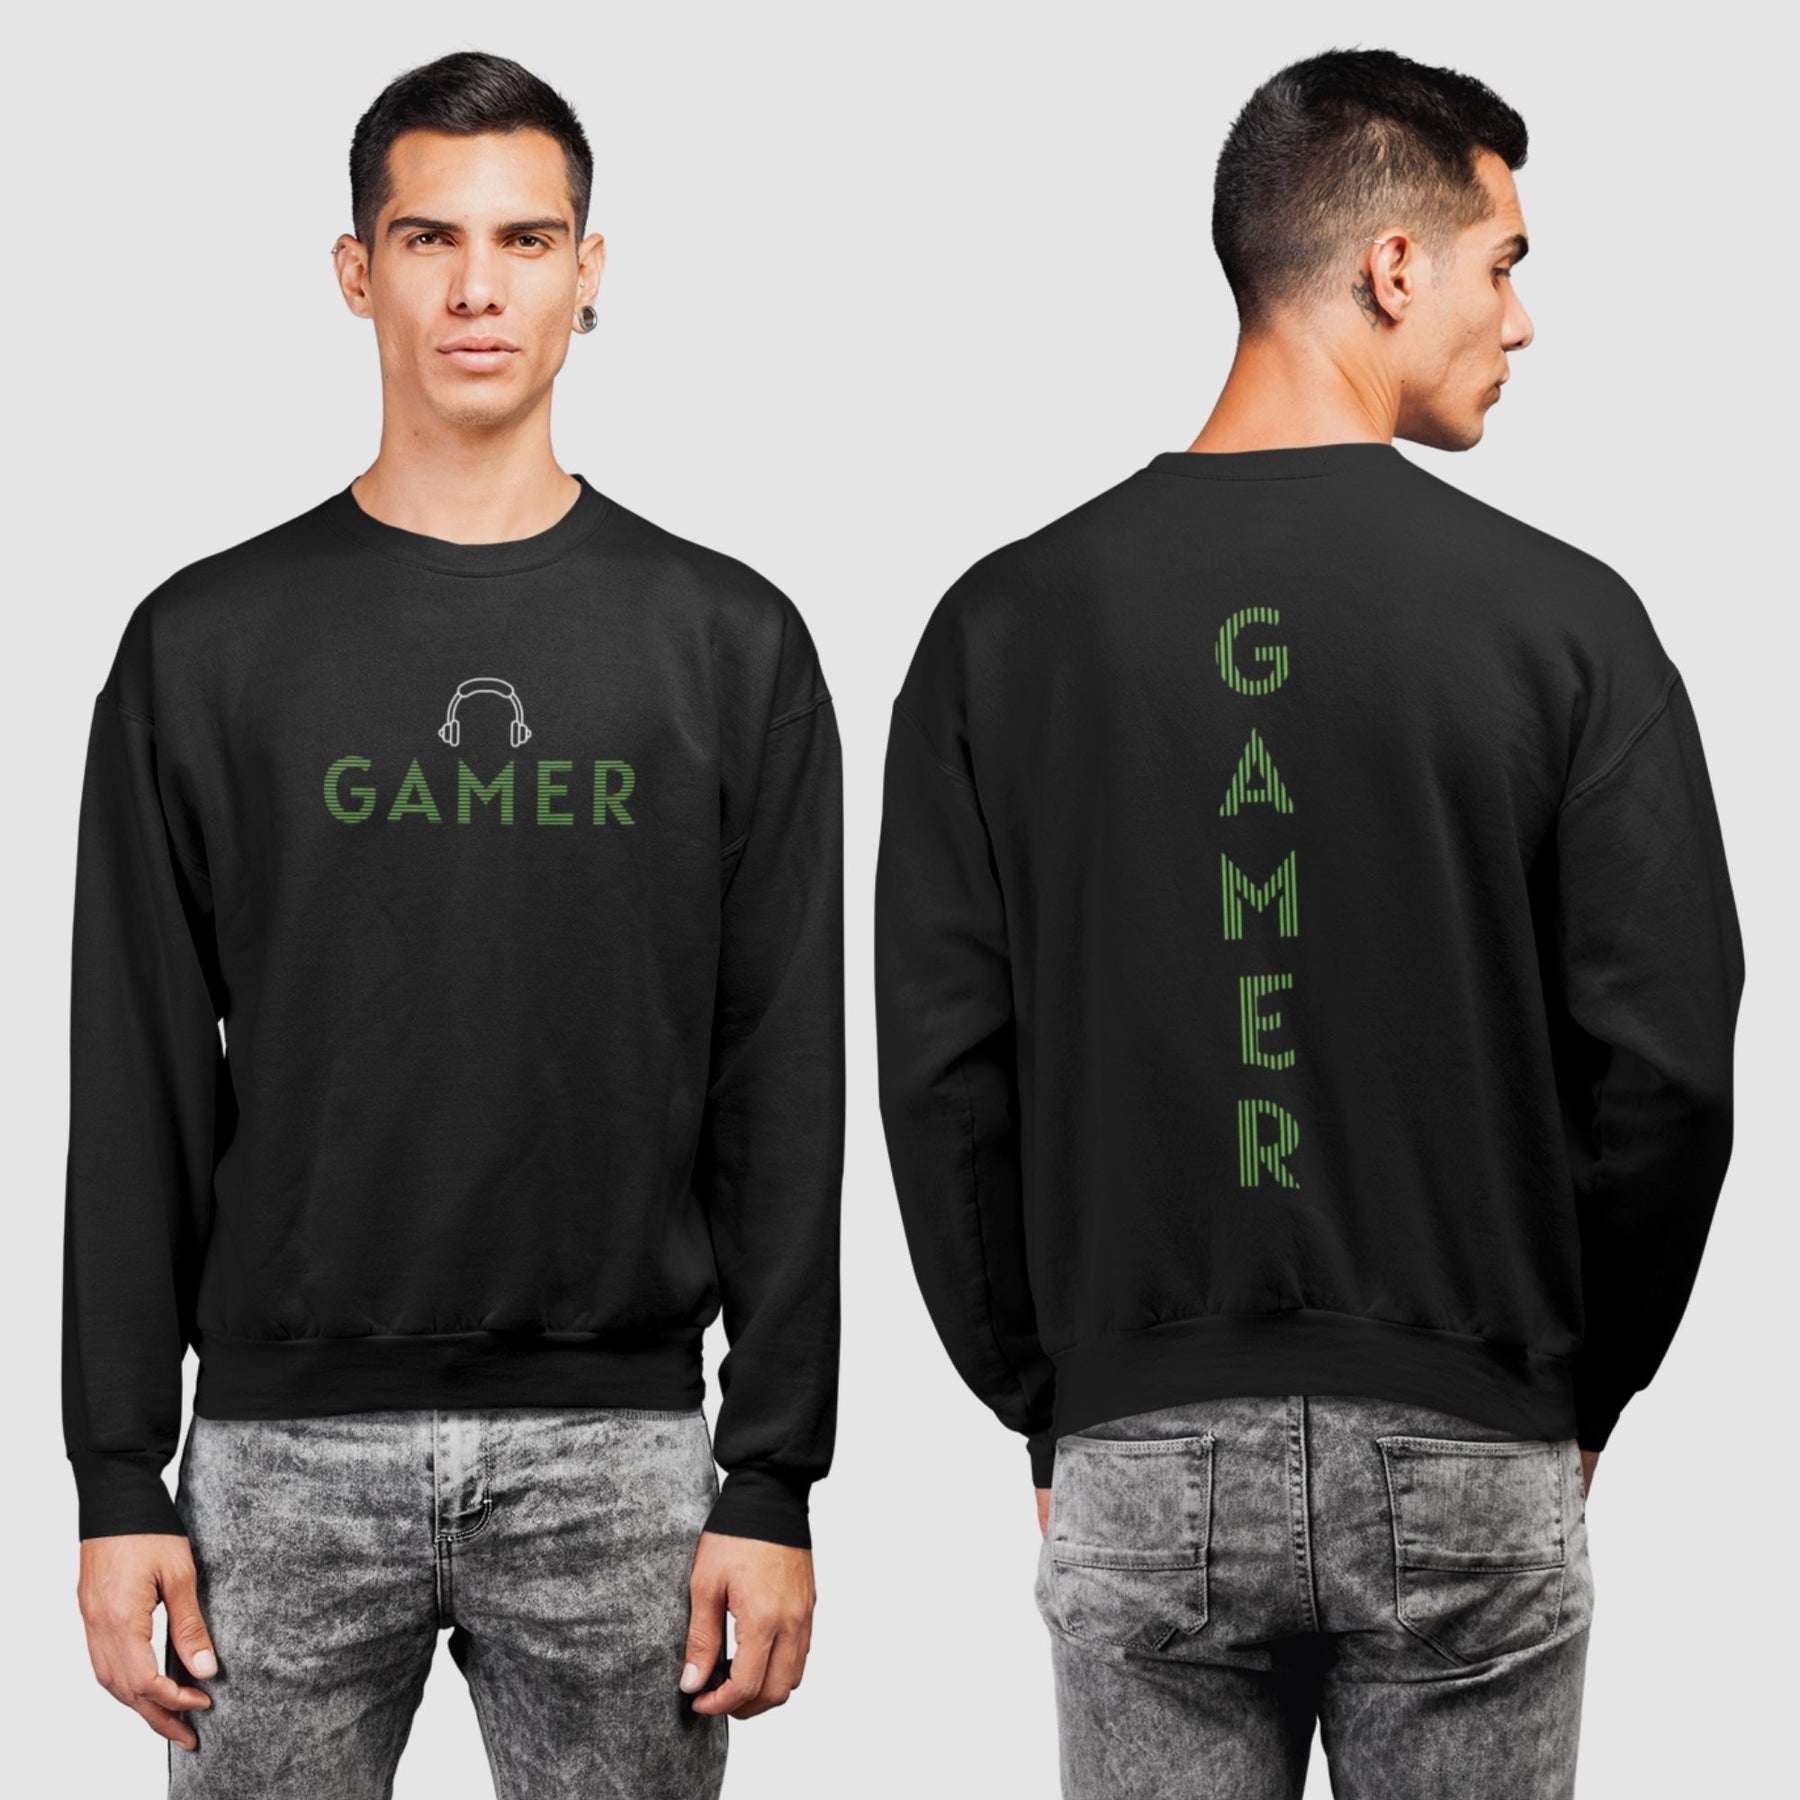 gamer-cotton-printed-unisex-black-sweatshirt-men-model-gogirgit-com